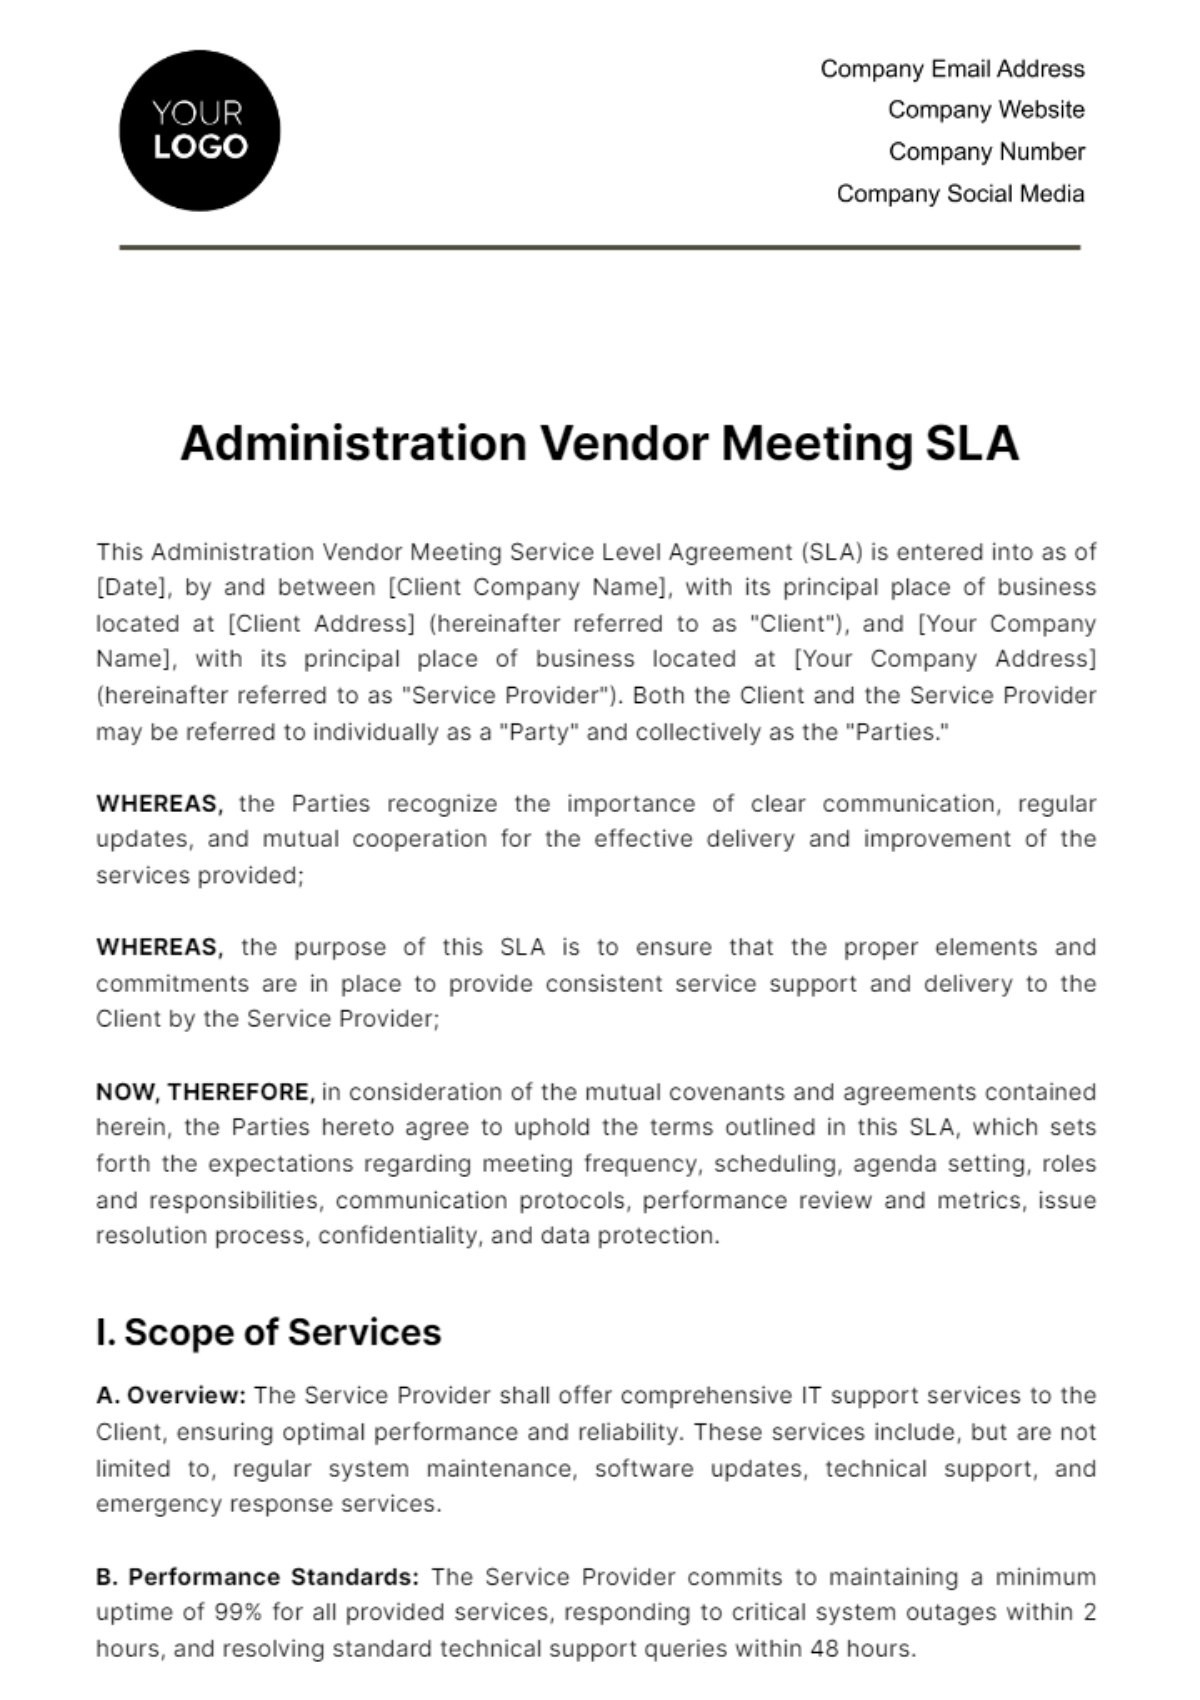 Administration Vendor Meeting SLA Template